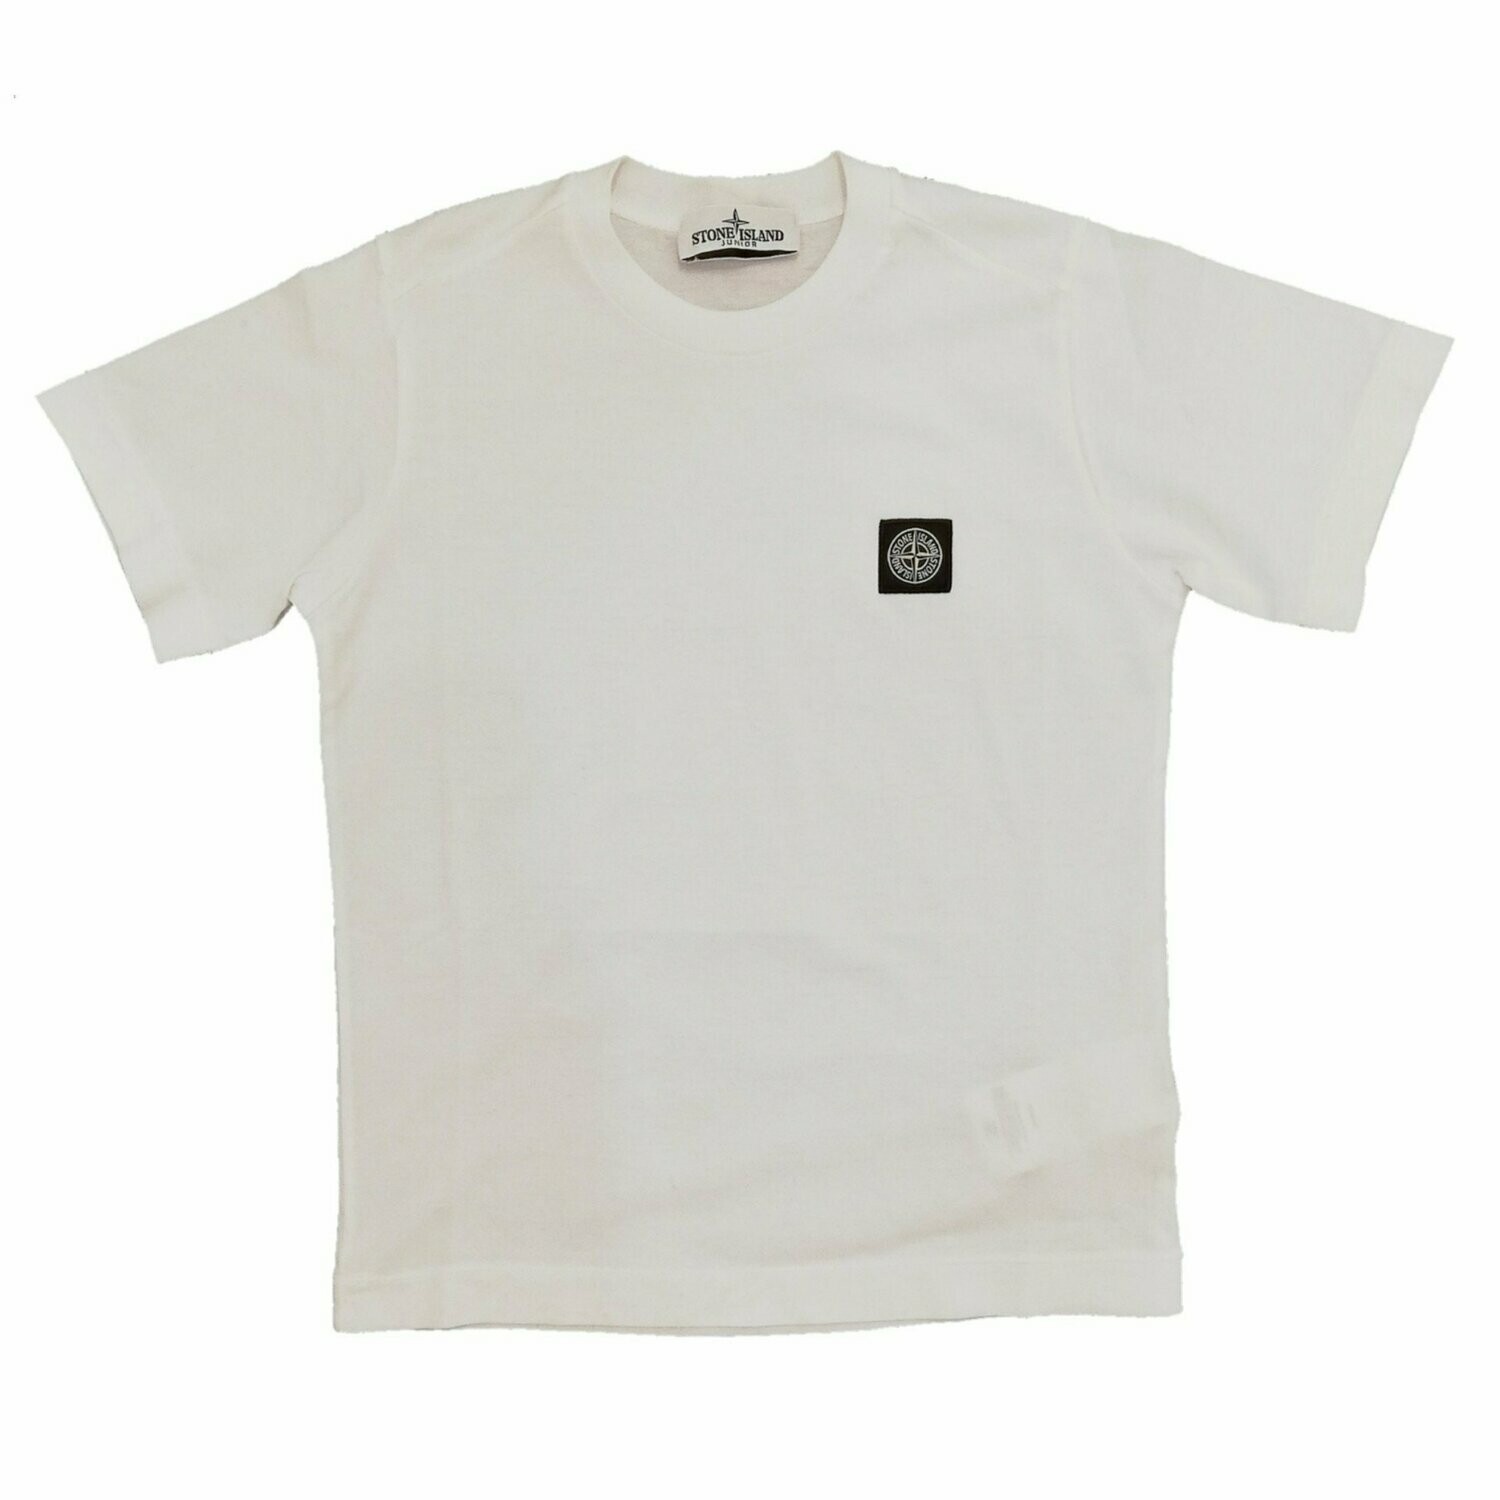 Stone Island - T-shirt bianca con logo, size: 2 anni